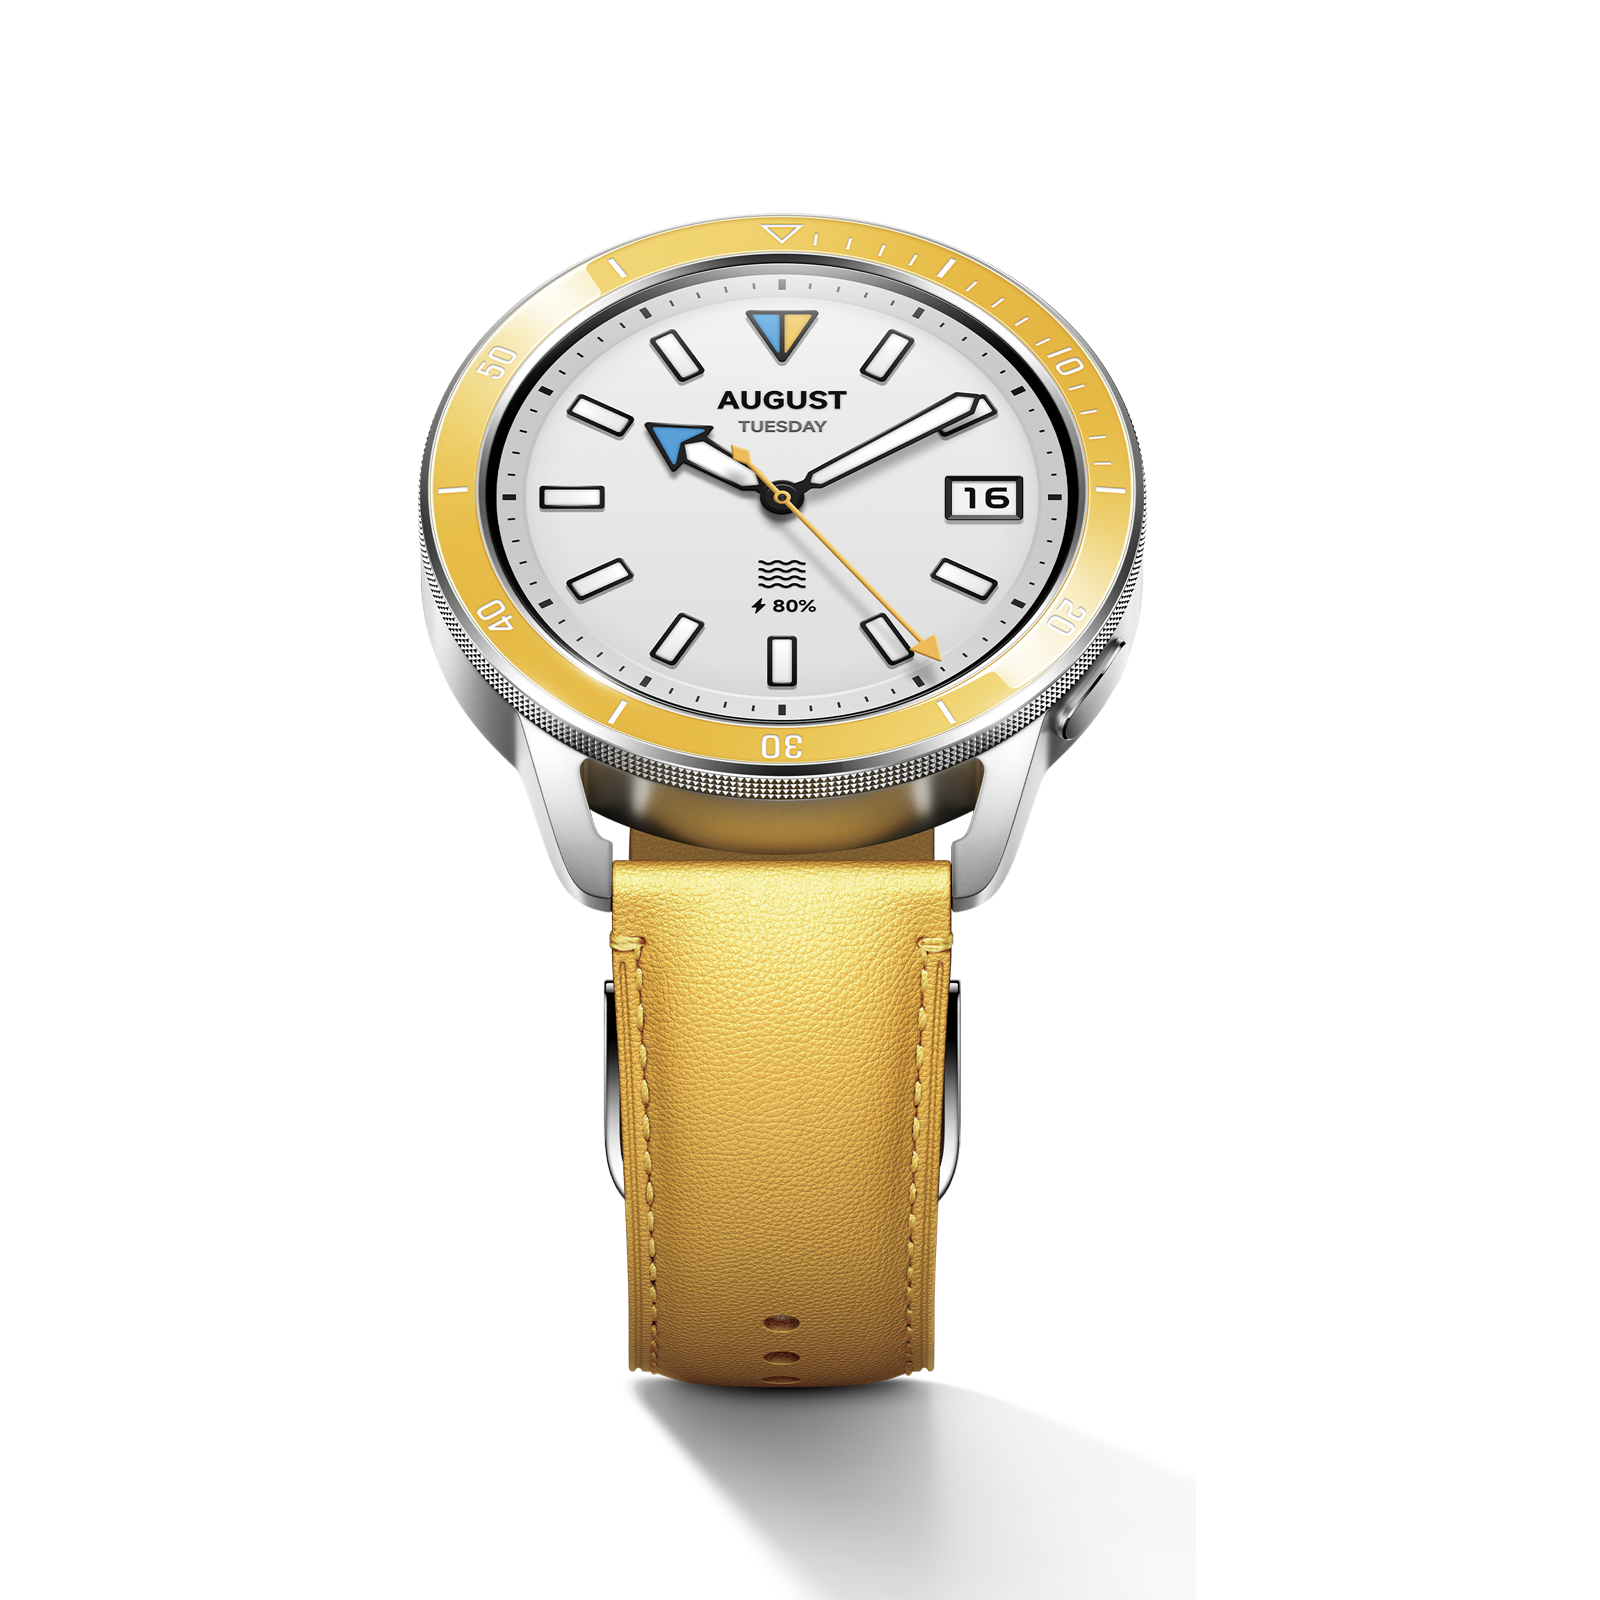 Xiaomi Watch Strap Chrome Yellow